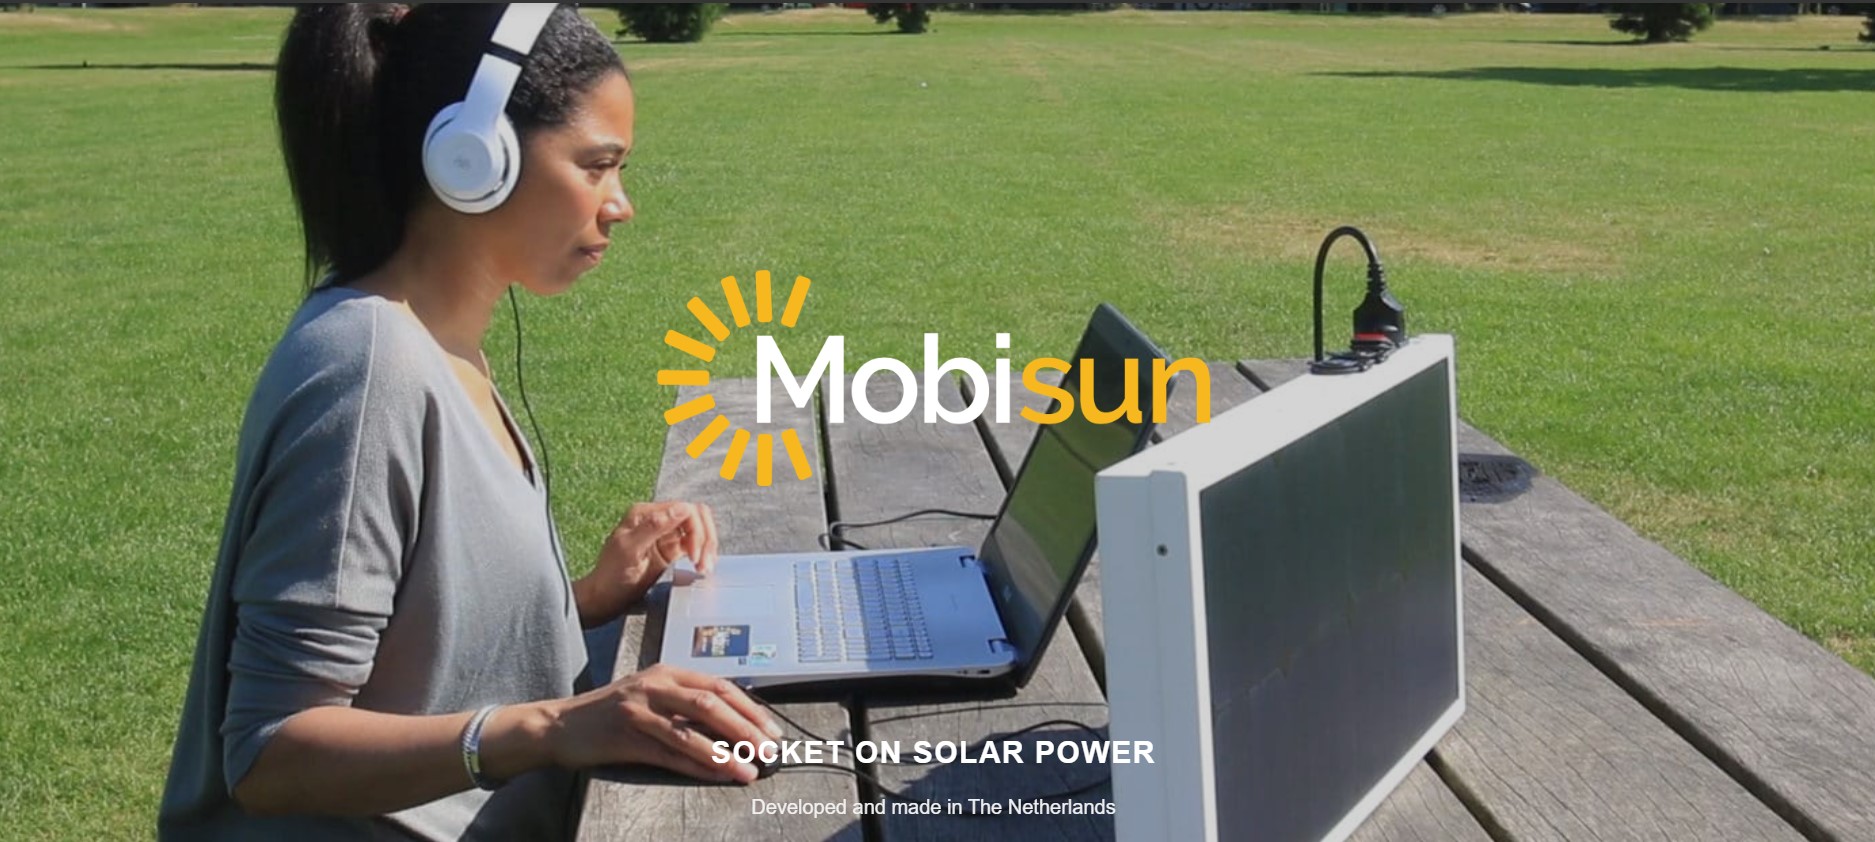 Portable solar panel 100W / 18V / 5.55 A Mobisun Mobisun International